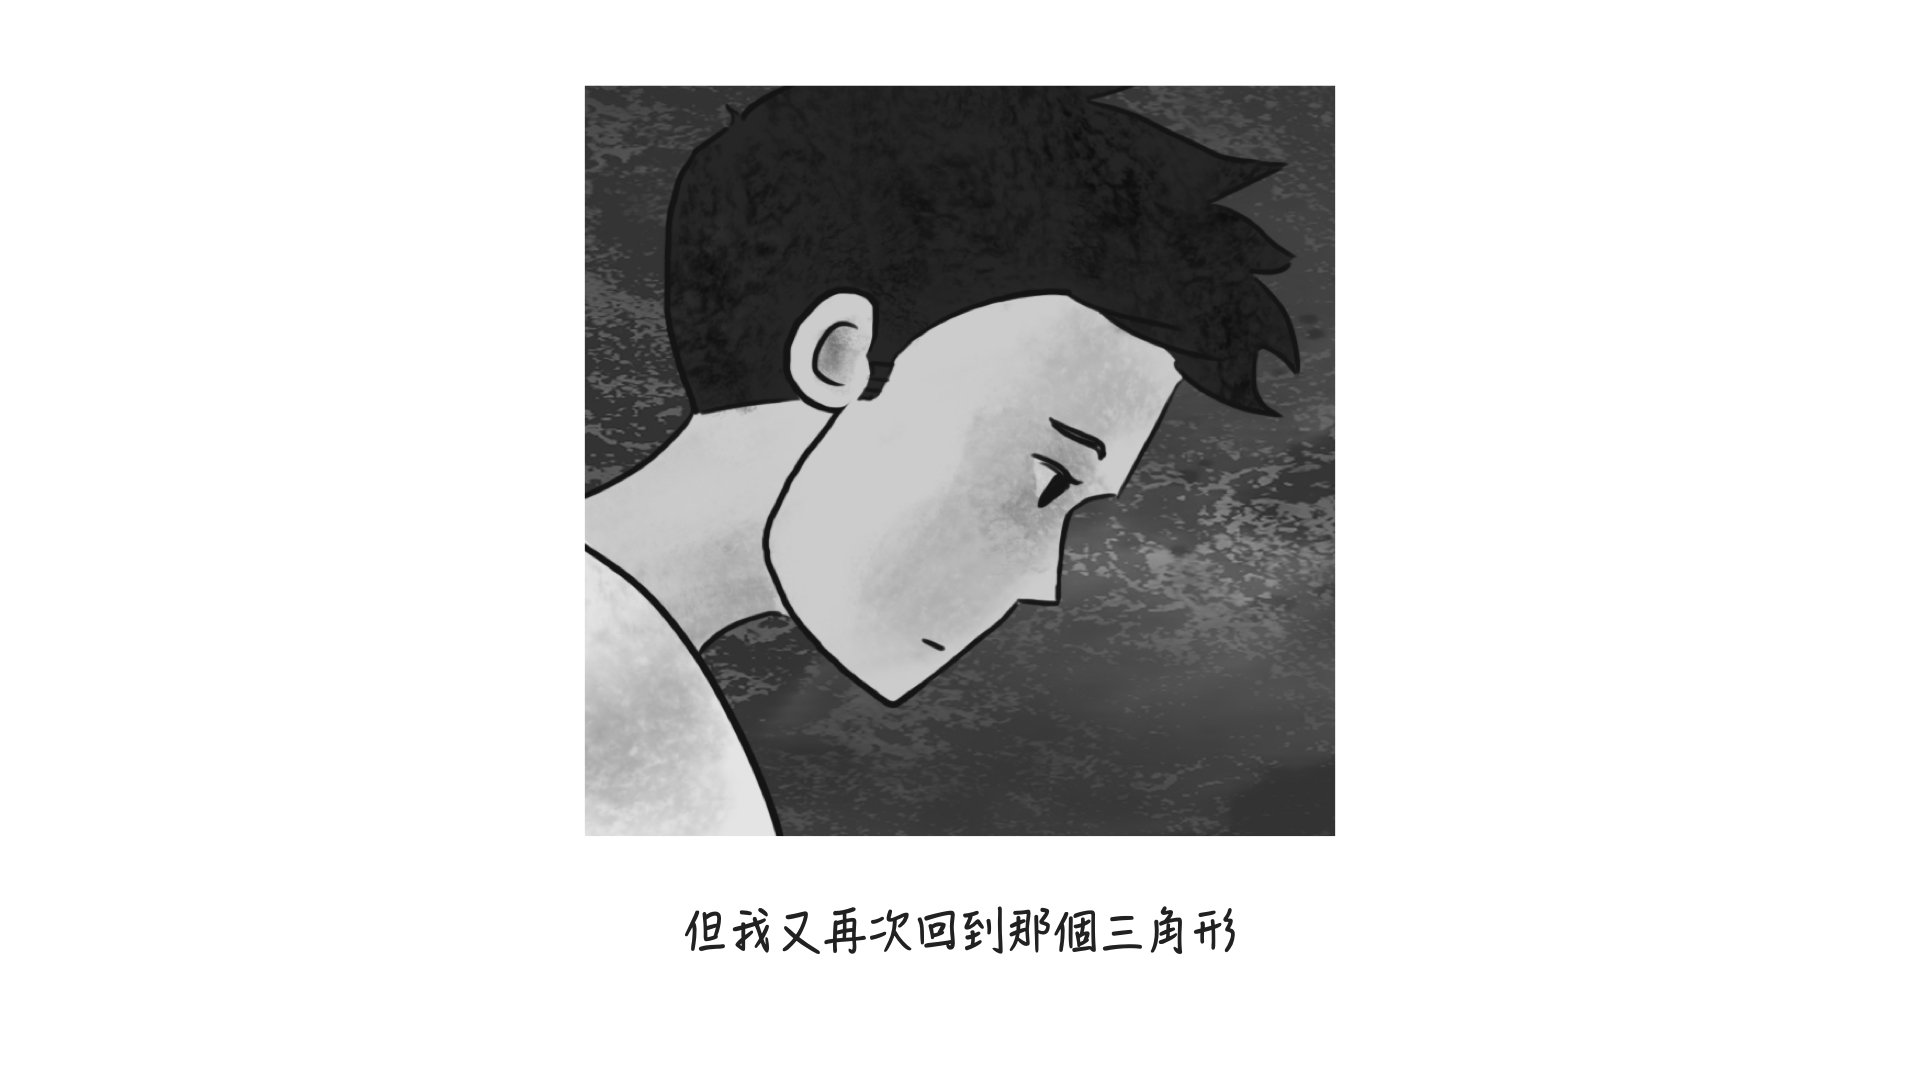 PP_Comic_Chinese_HK.054.jpeg